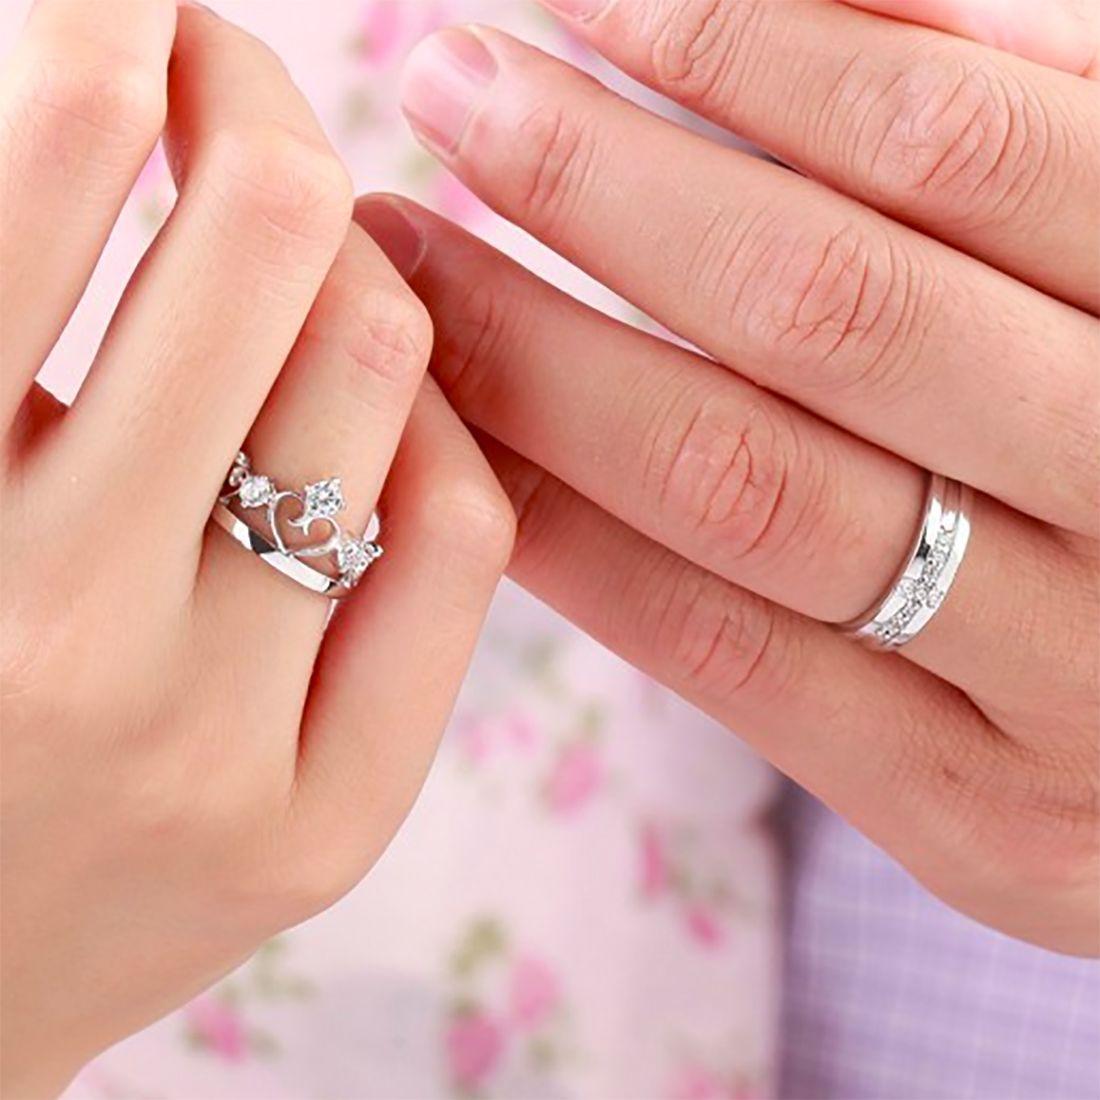 74143 diamond rings for couples kacyworld stylised diamond rings for couples 3